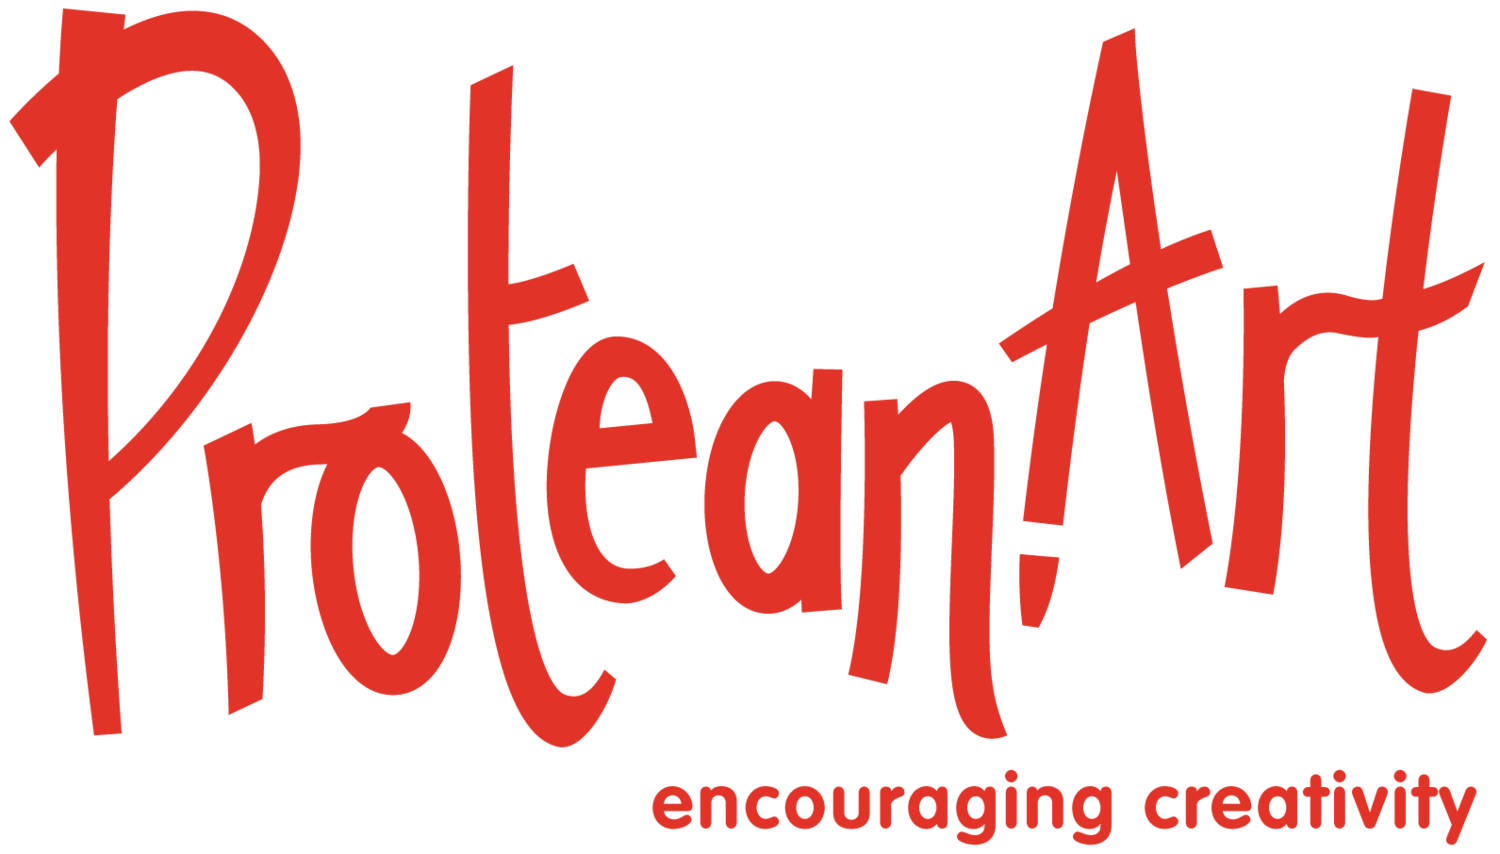 ProteanArt - Encouraging creativity